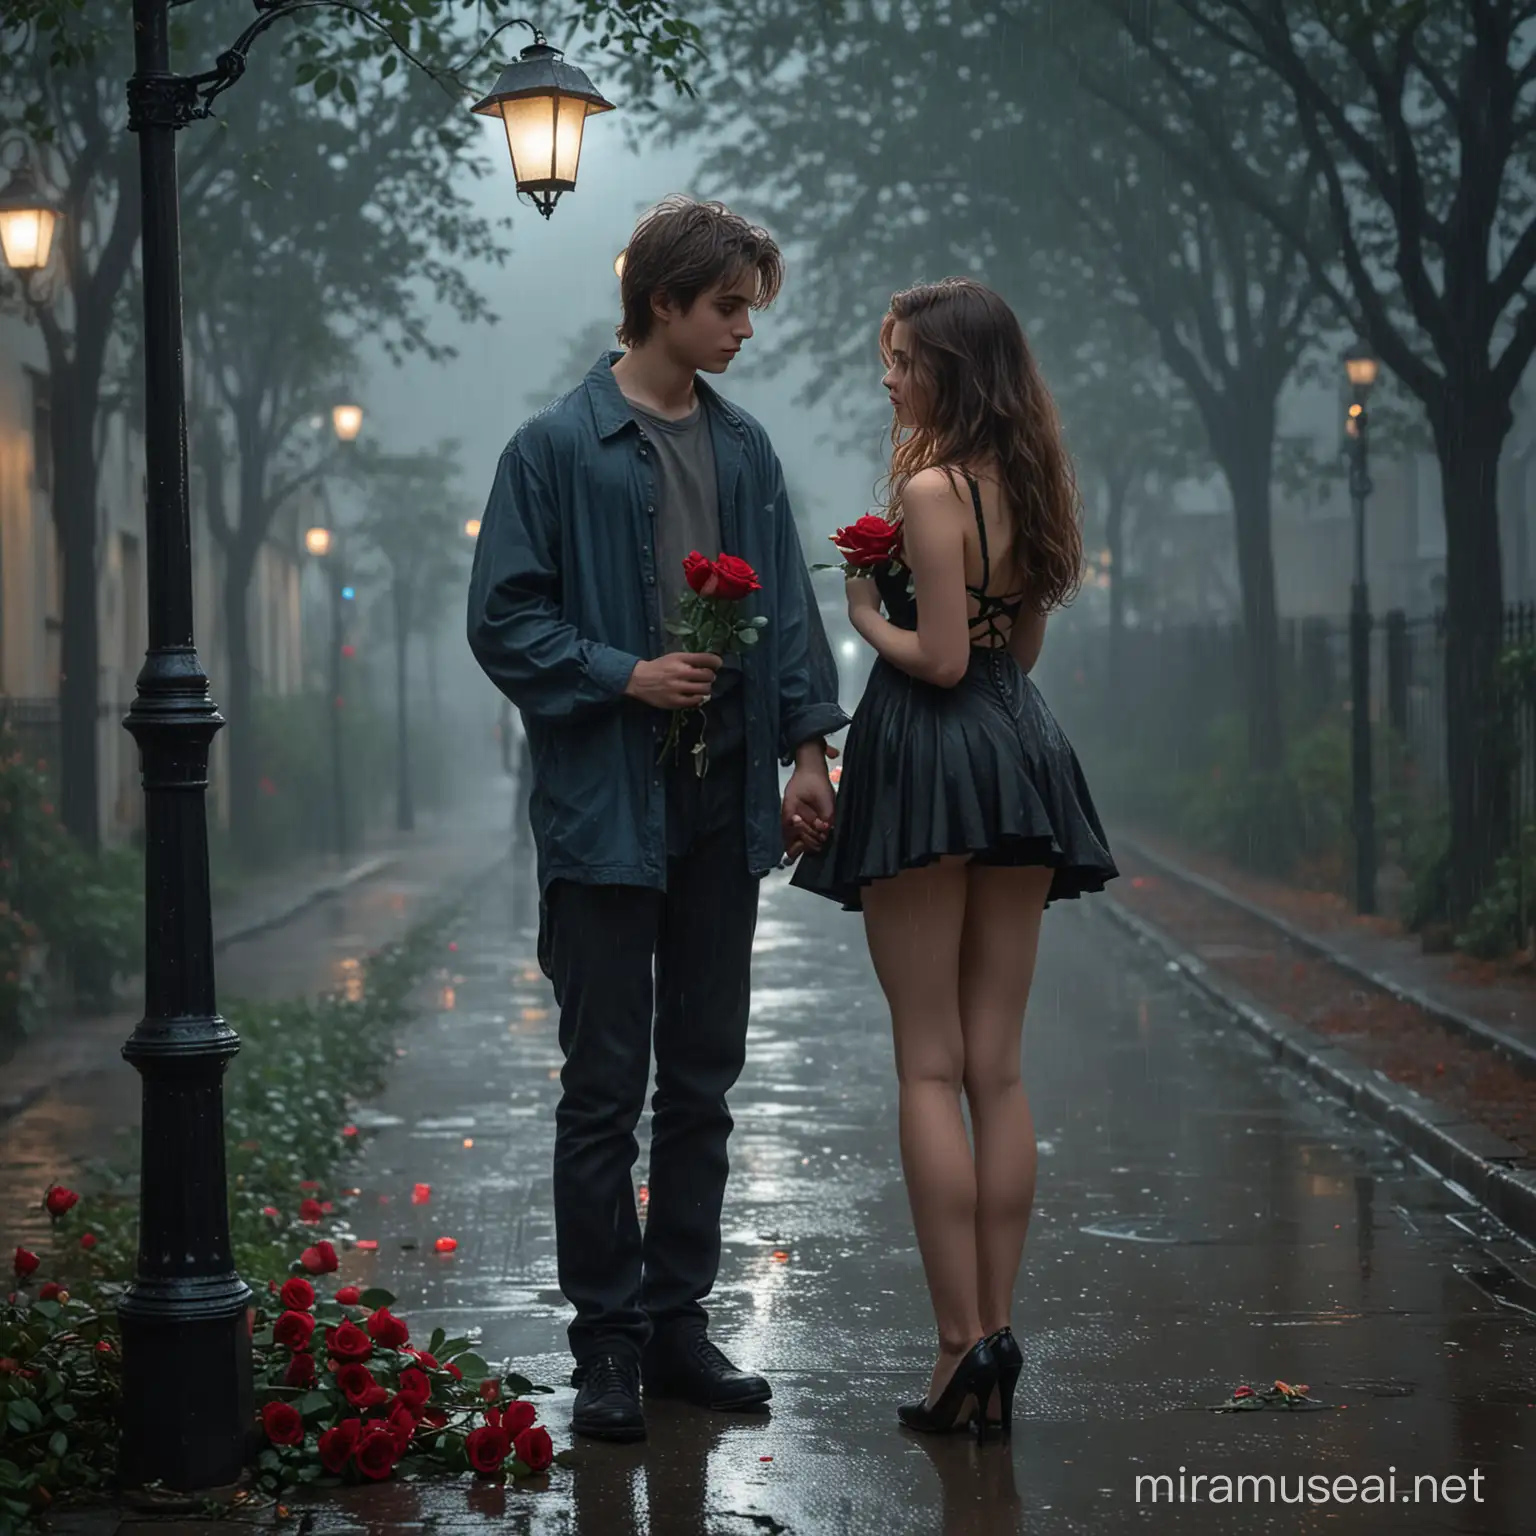 Twilight Romance Boy Holding Red Rose for Beautiful Girl in Rainy Street Scene